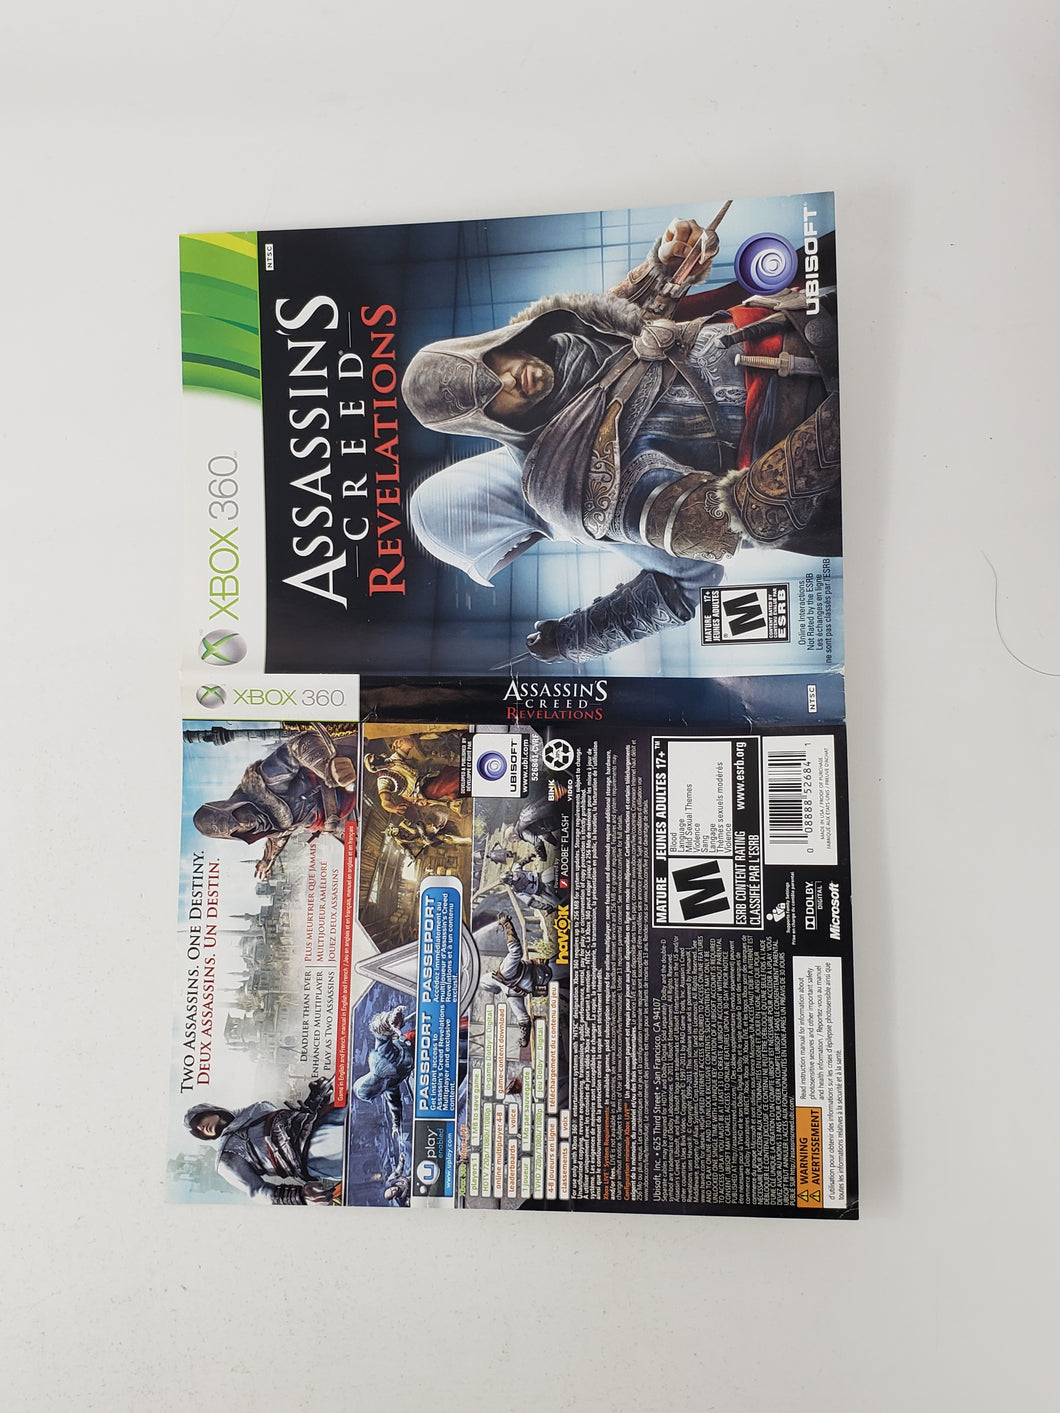 Assassin's Creed Revelations [Cover art] - Microsoft Xbox360